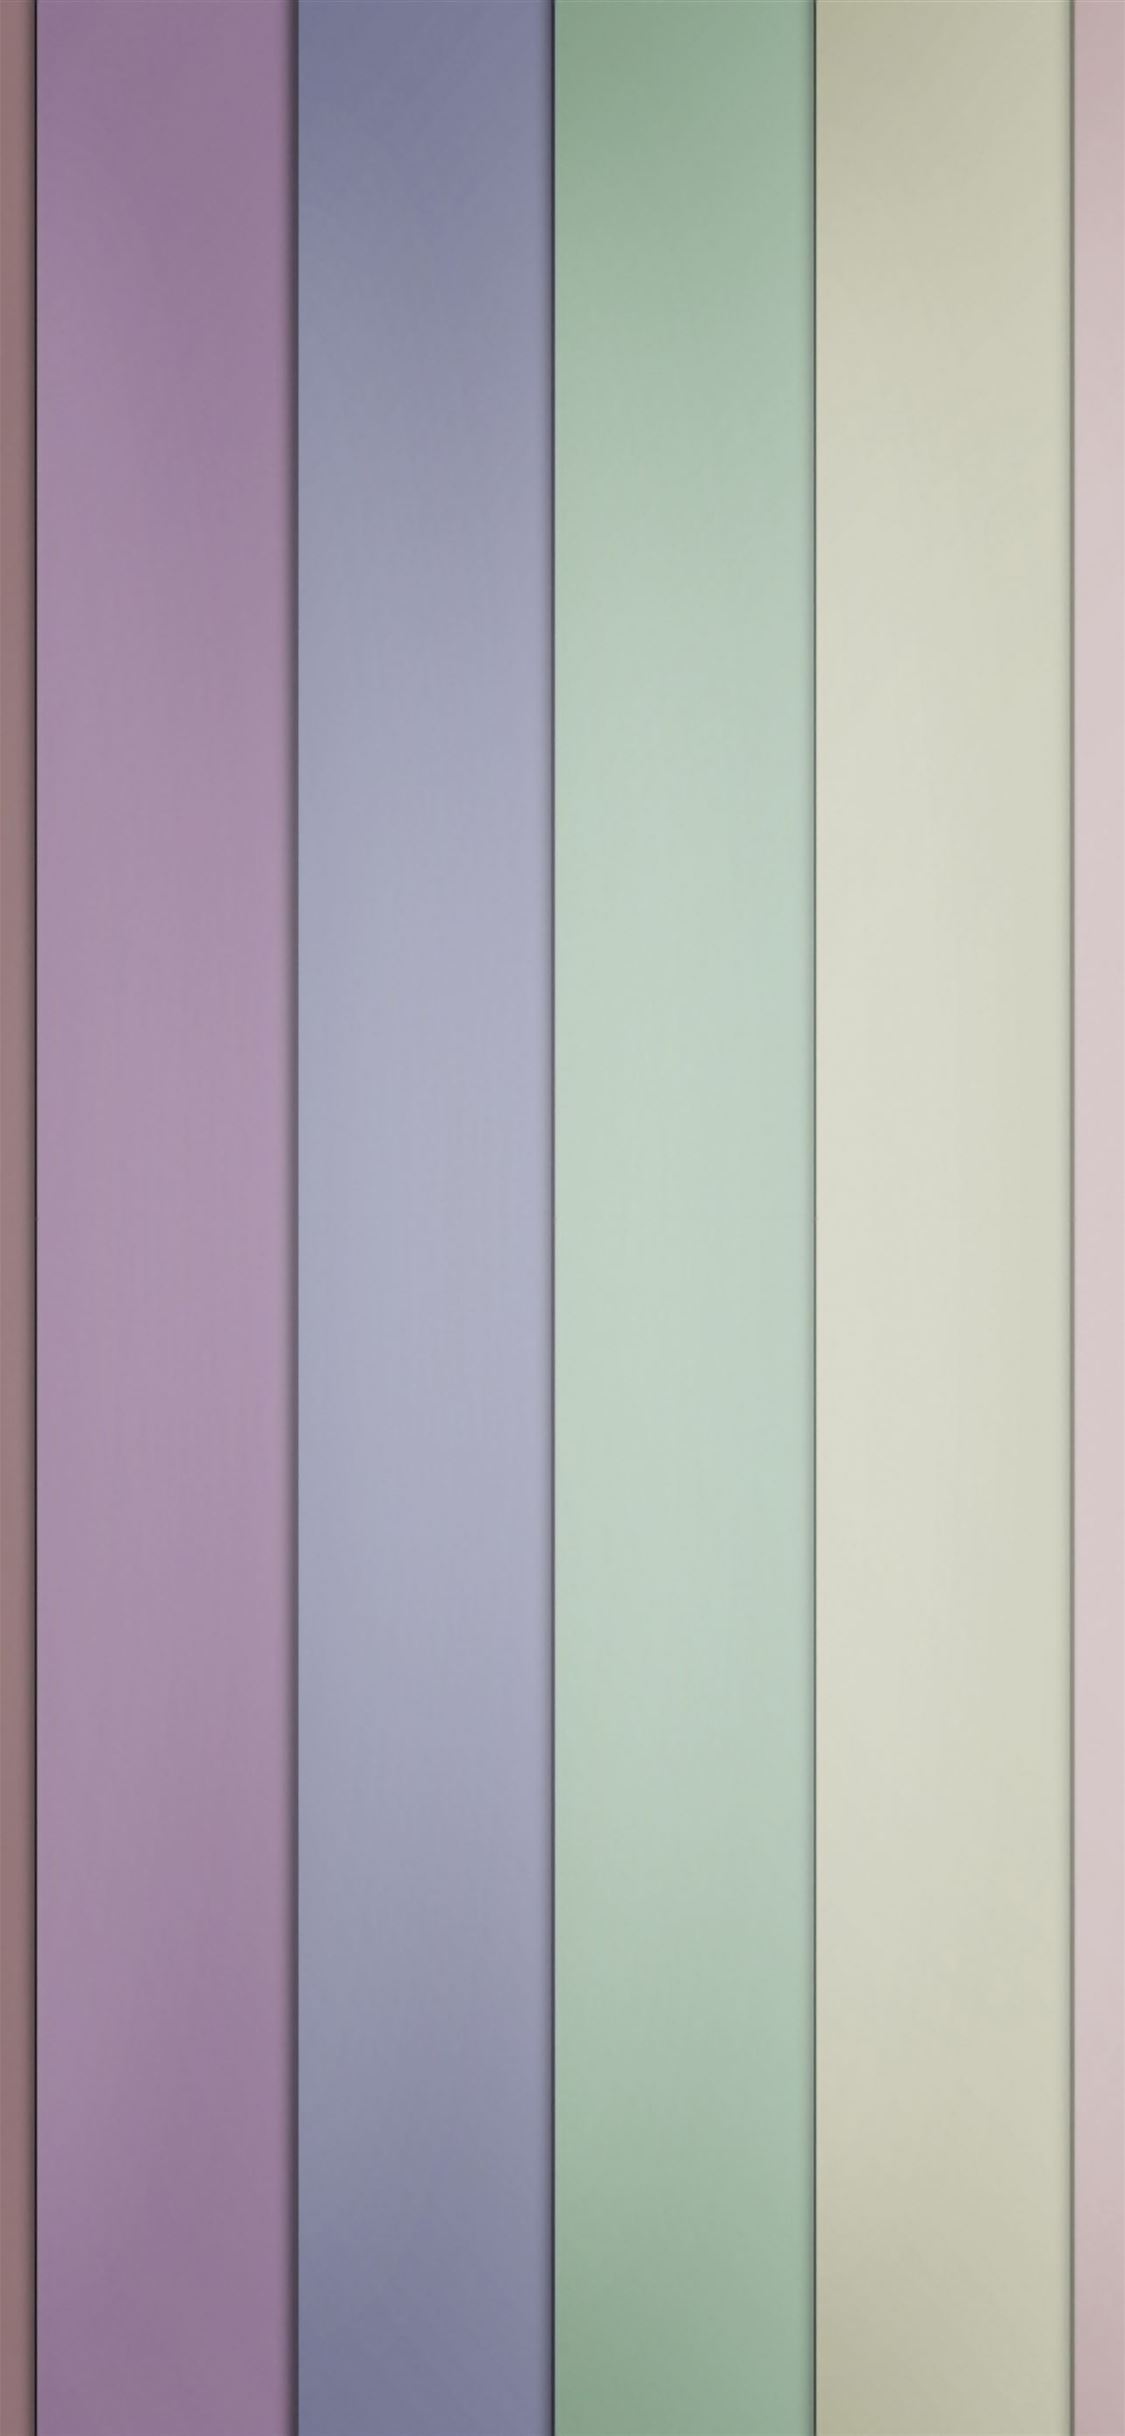 Pastel colors iPhone wallpaper 